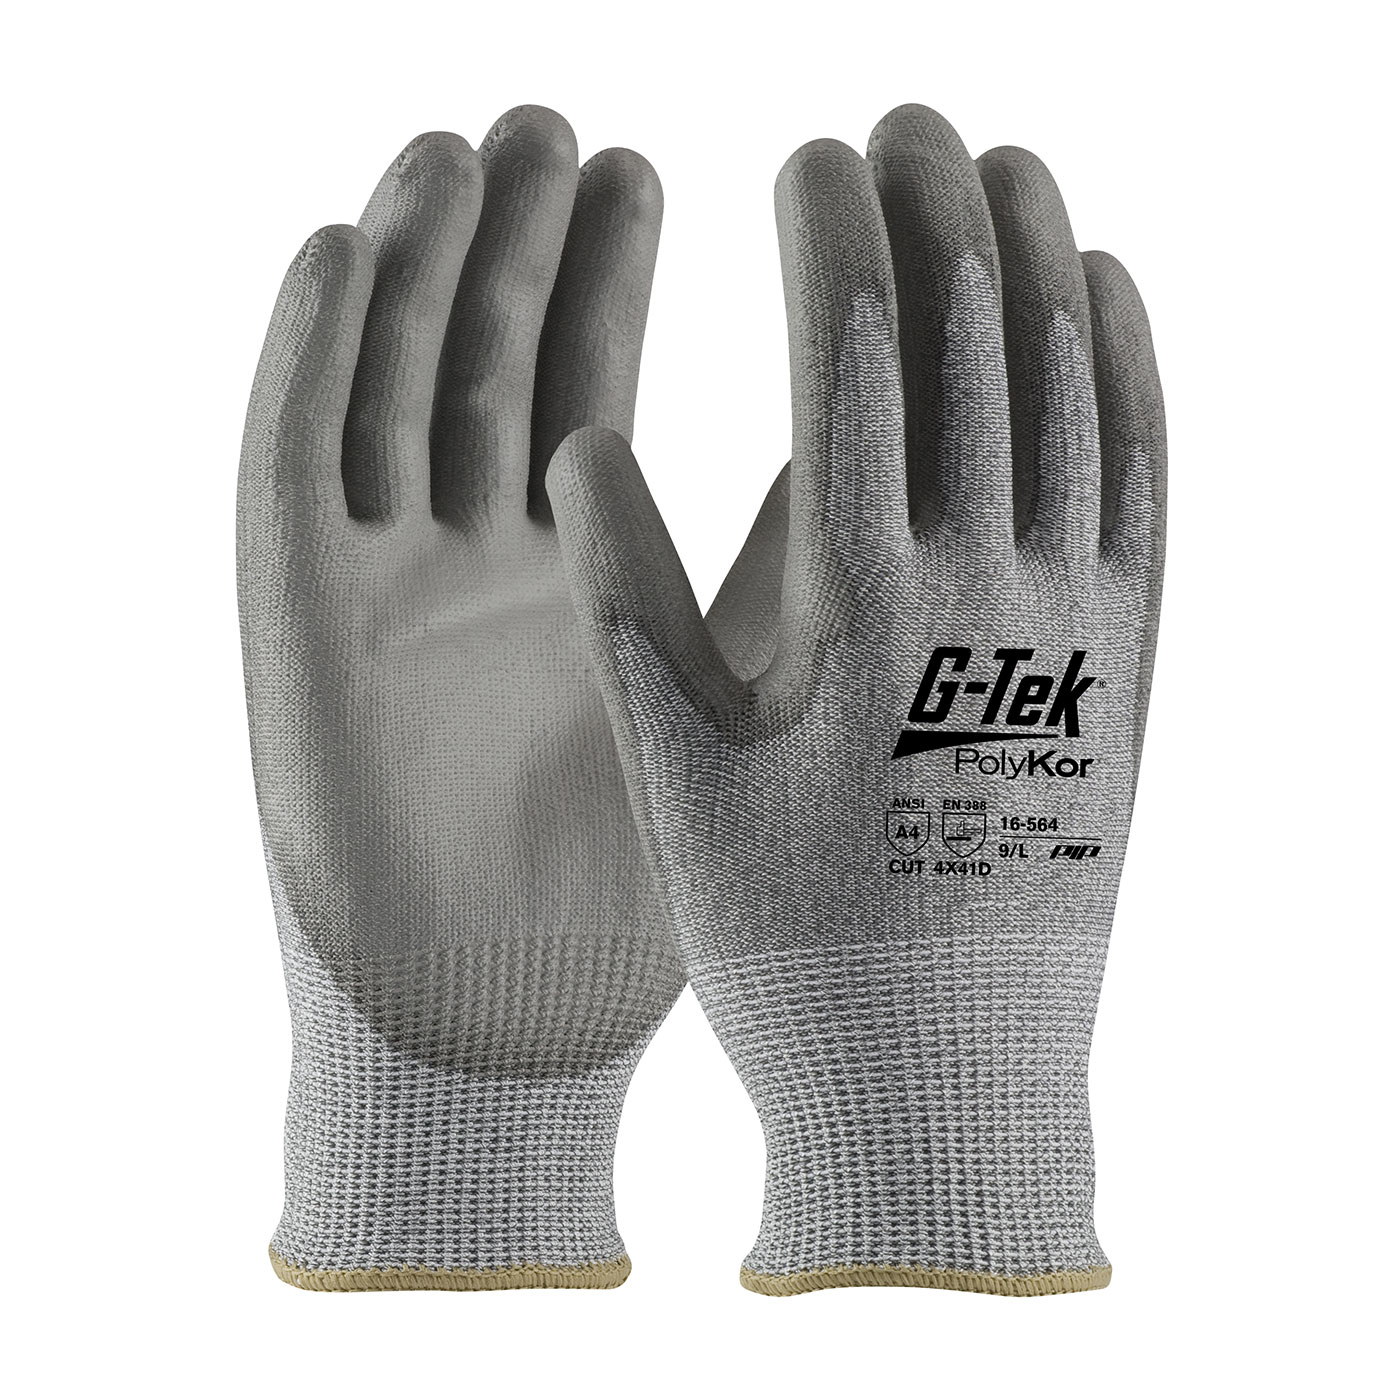 PIP® G-Tek® PolyKor™ Polyurethane Coated Gloves #16-564